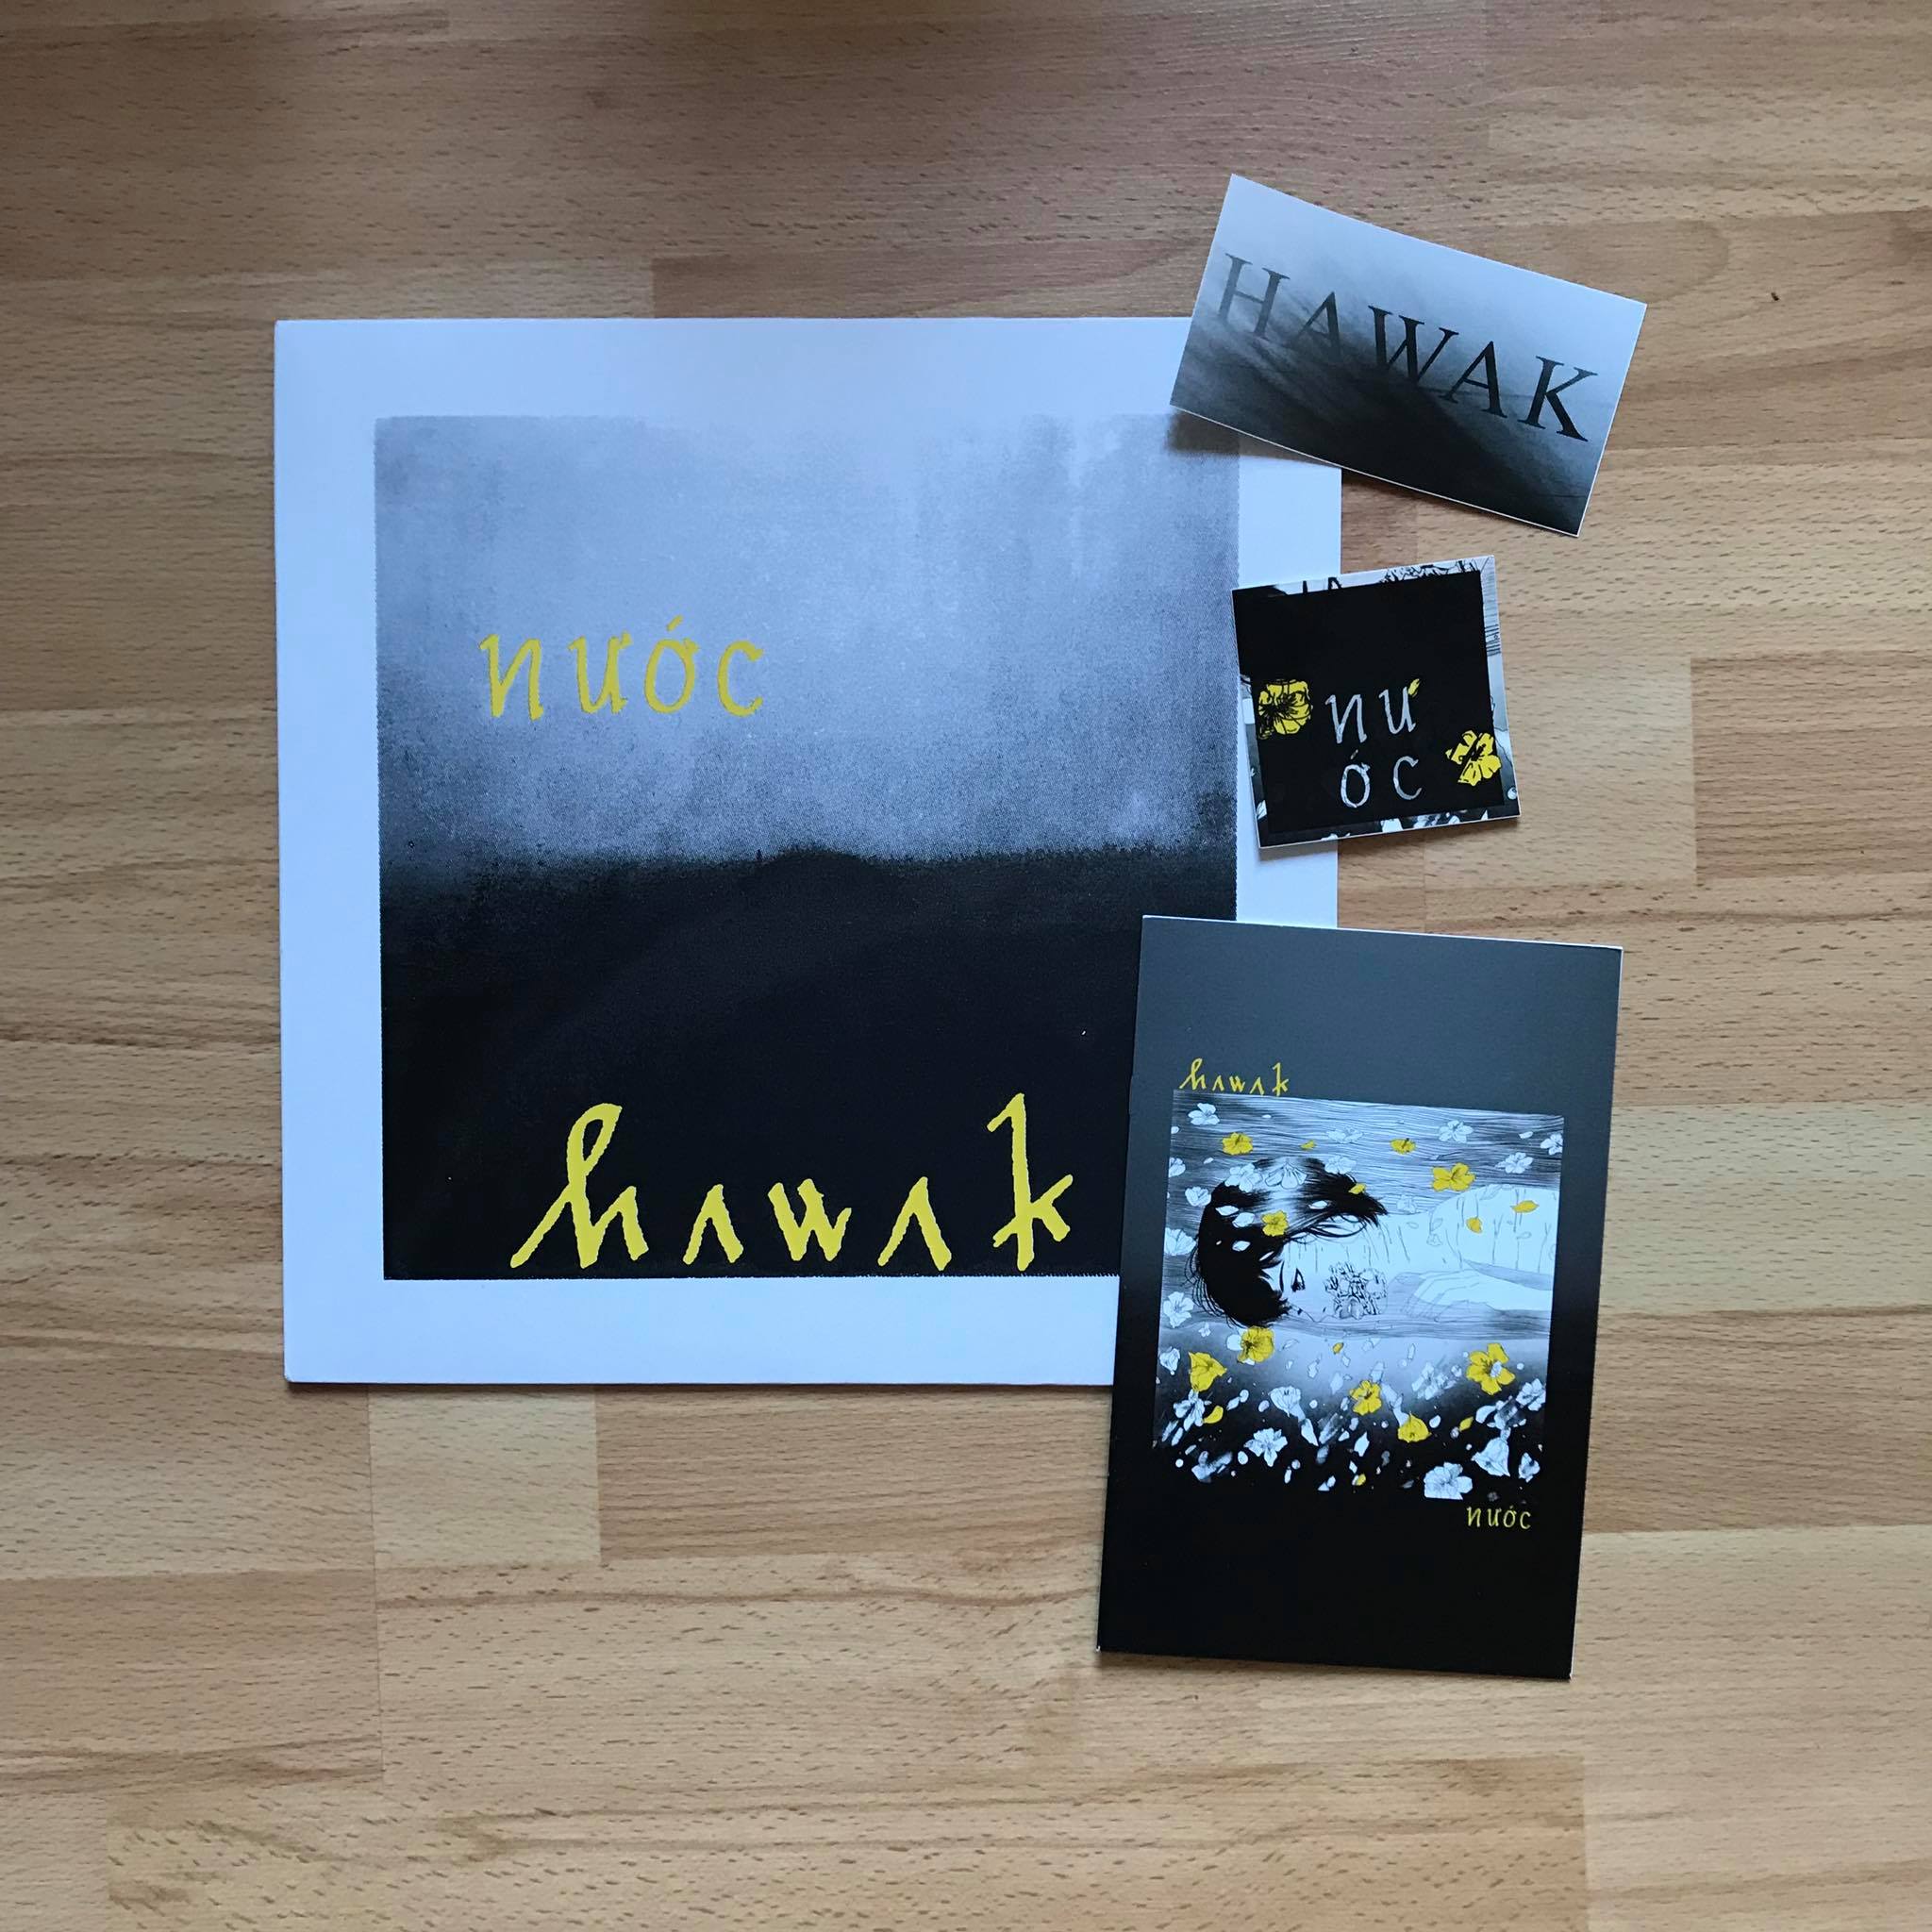 HAWAK - nuoc (12")